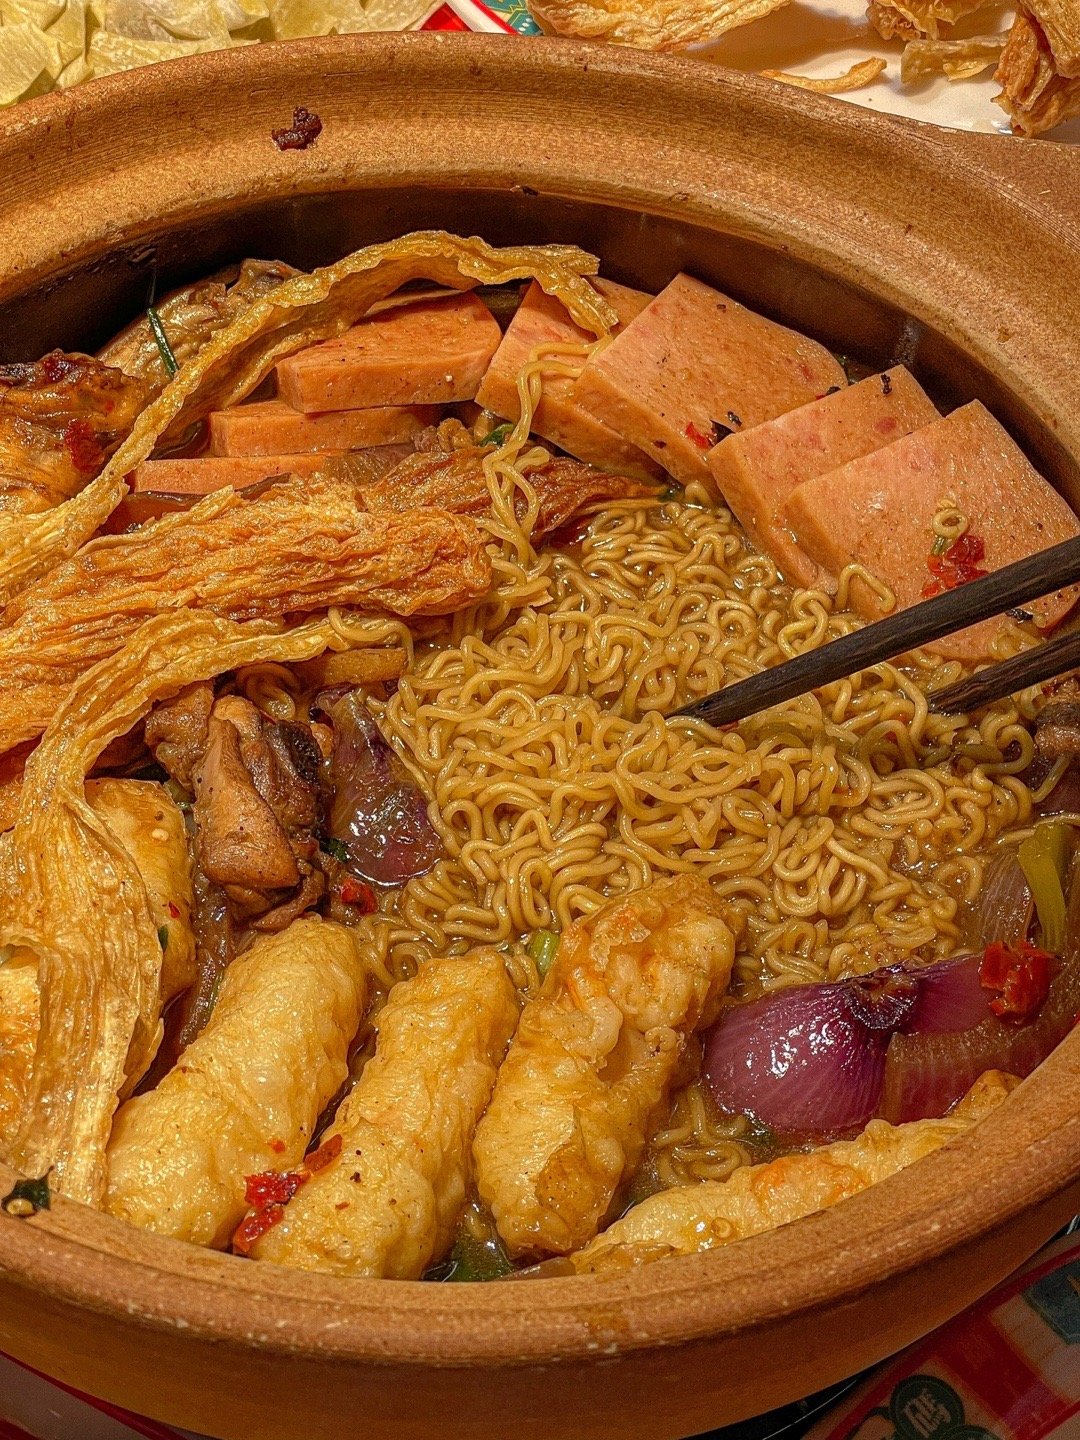 ziyantang: 上海美食-小吃篇 最道地的上海美食